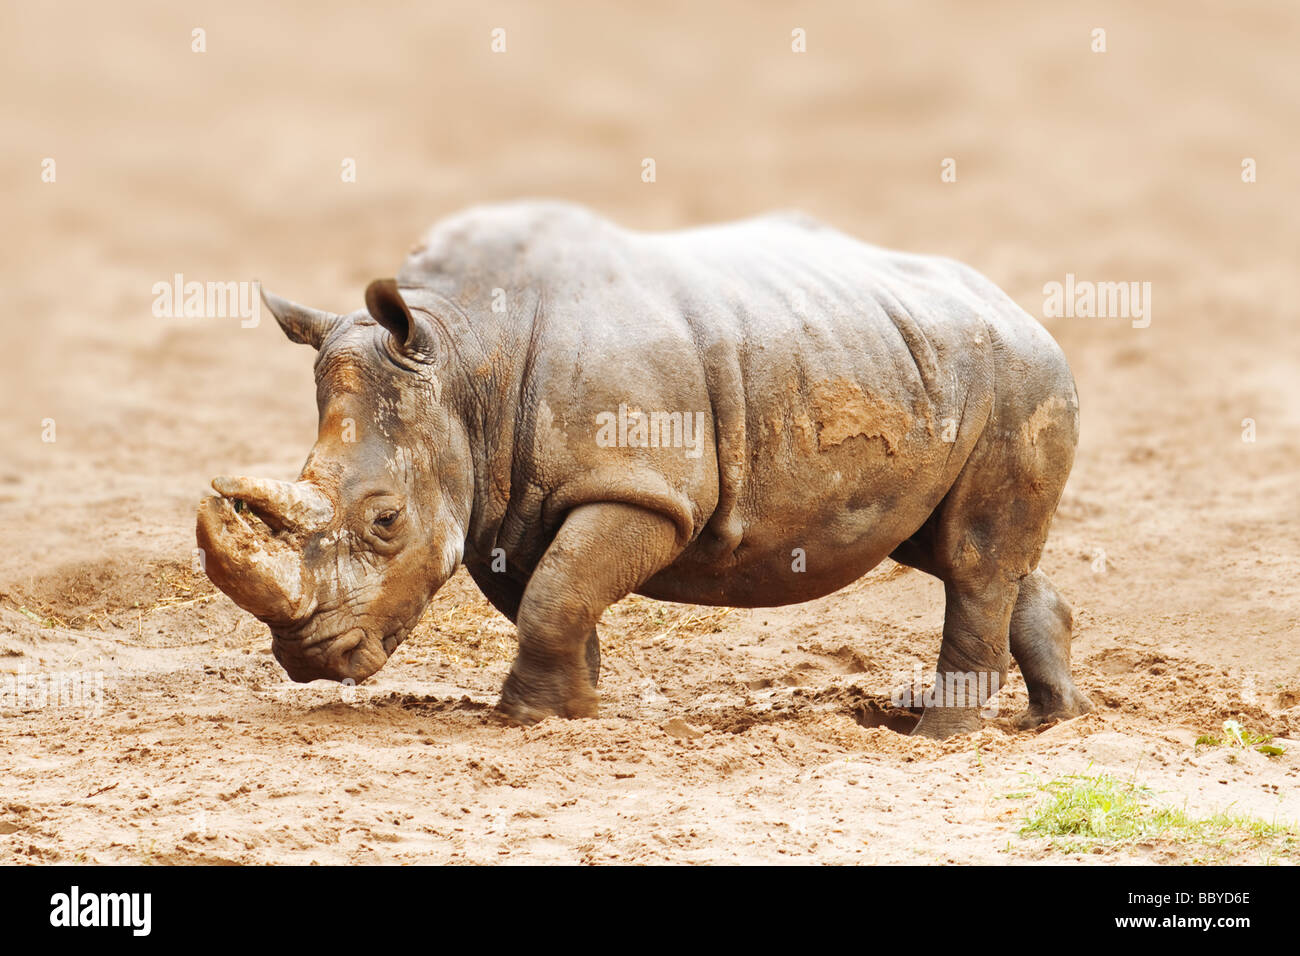 rhinoceros on sand closeup Stock Photo